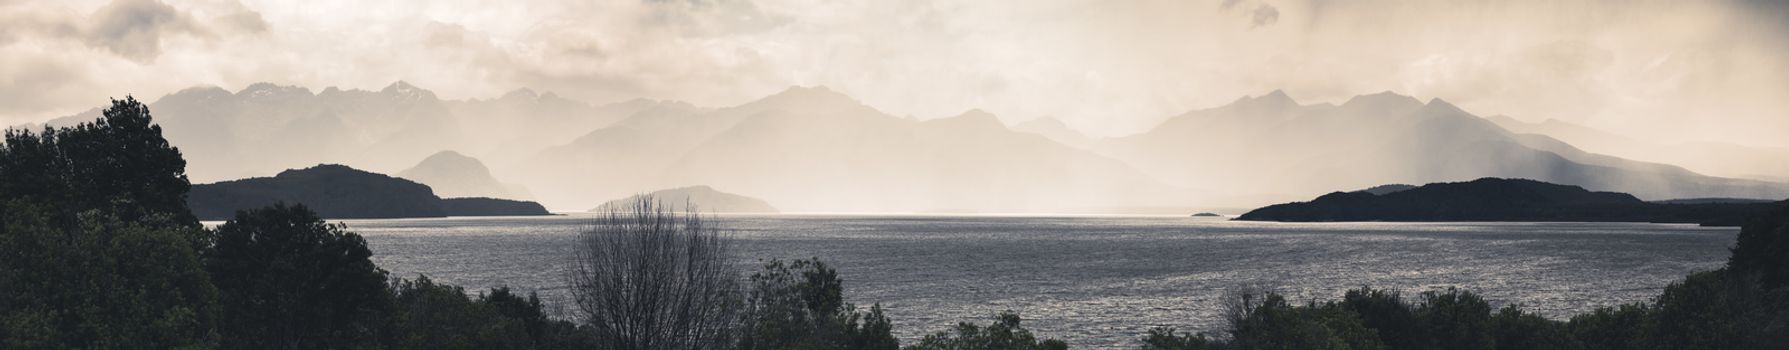 An image of a rainy day at Lake Te Anau, New Zealand